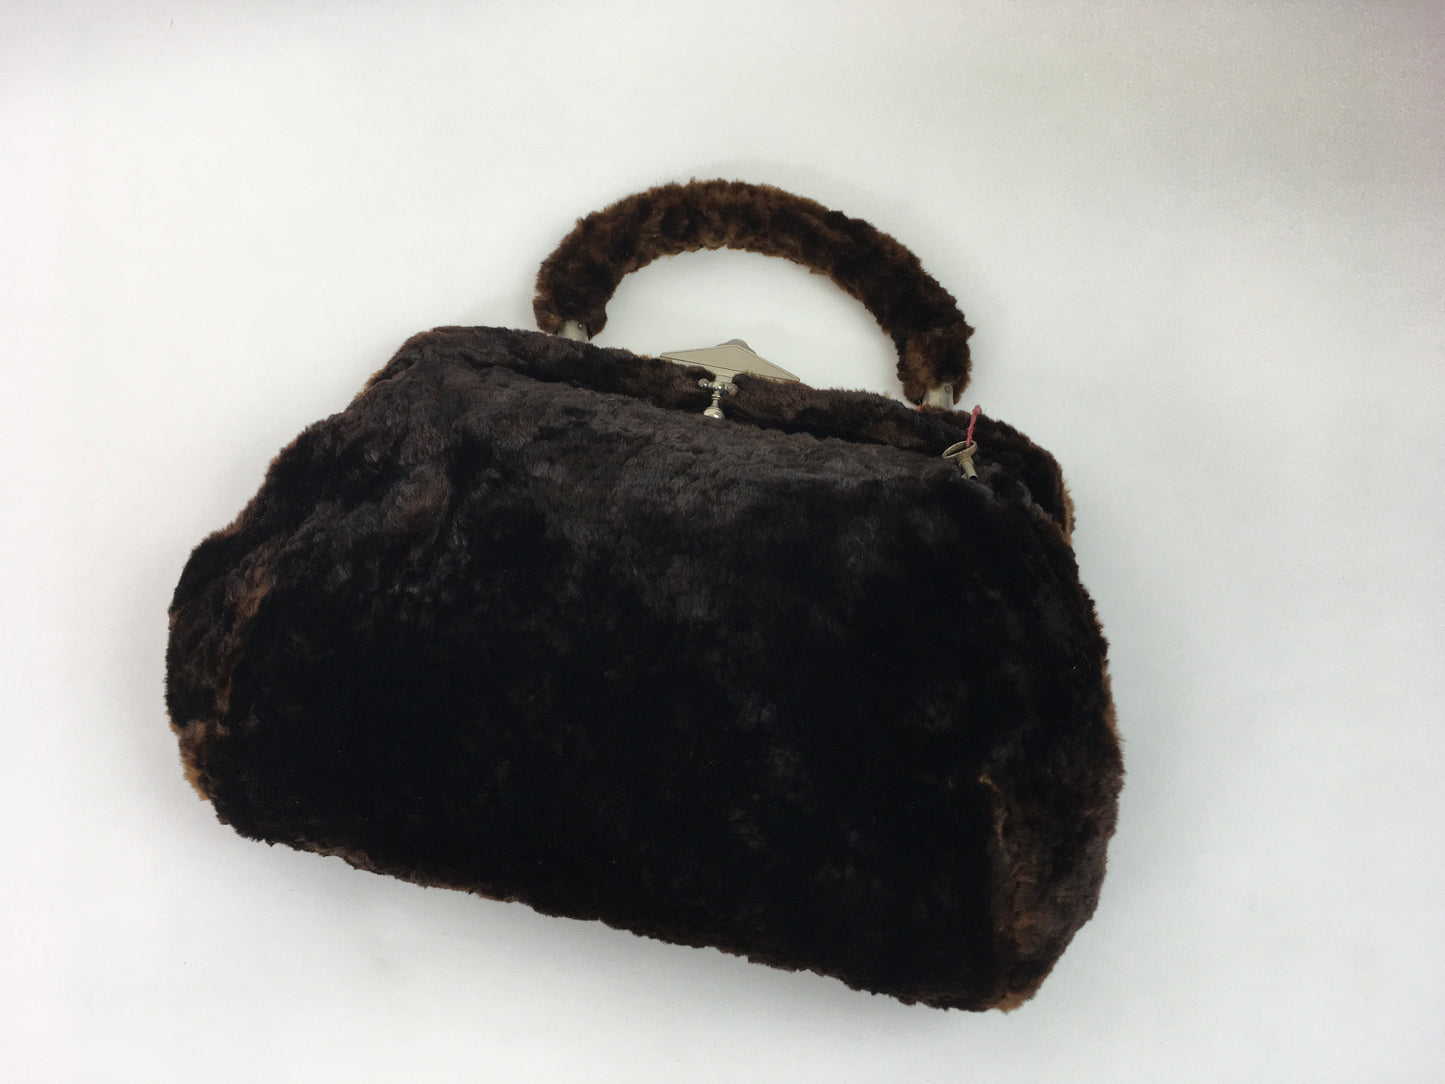 Original late 1920’s early 1930’s Moleskin Handbag and Muff - With A Fabulous Lock and Original Key